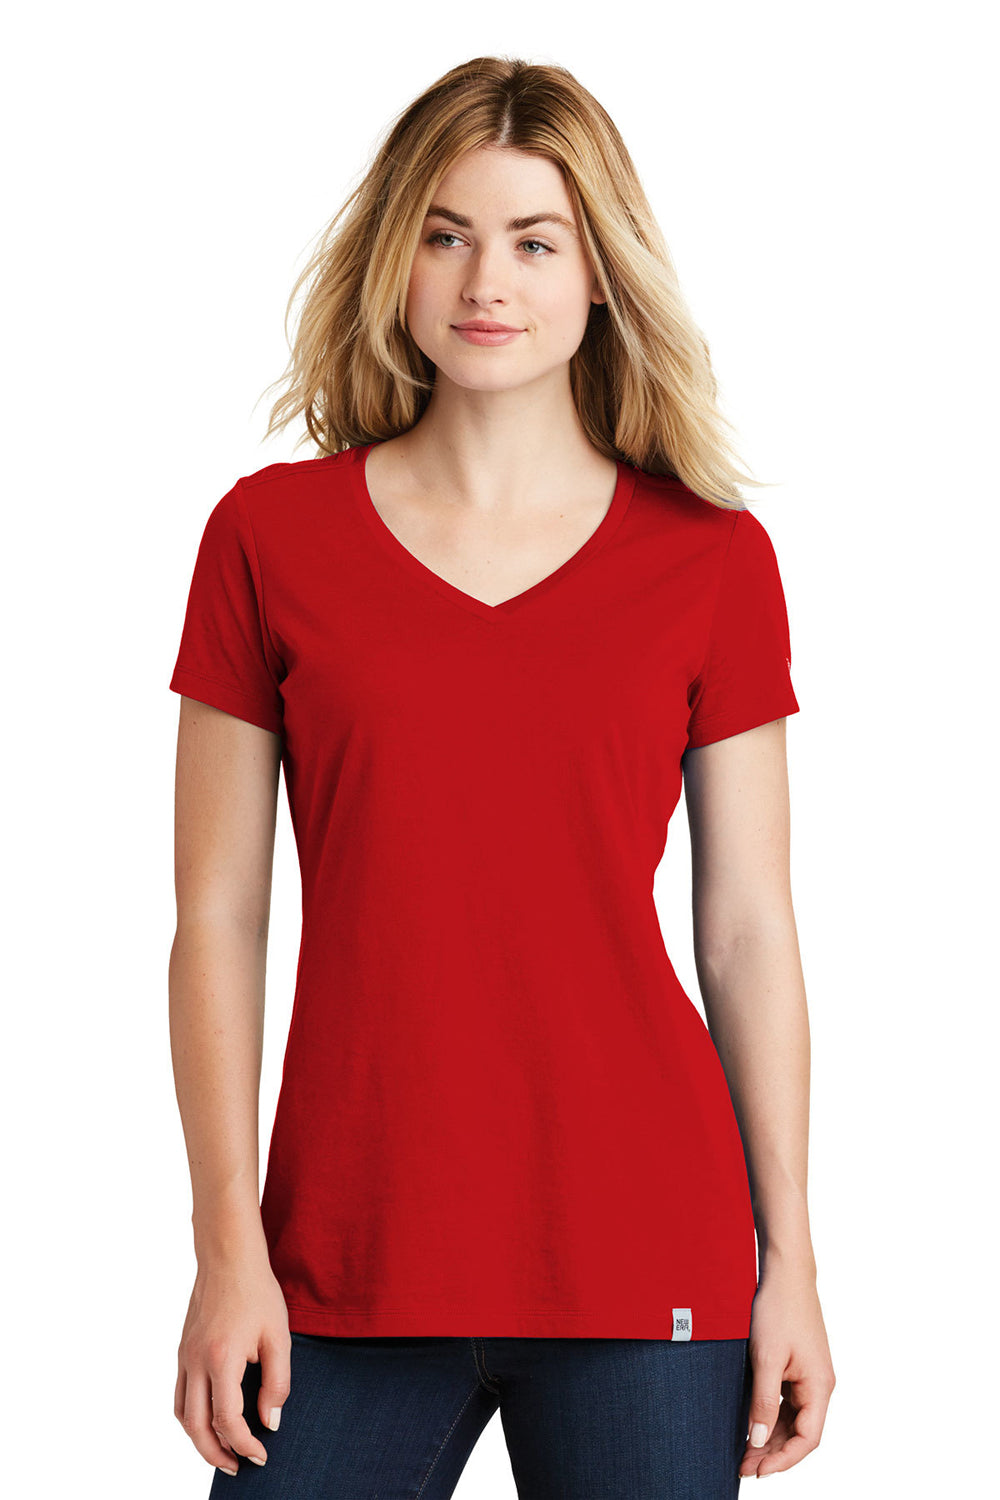 New Era LNEA101 Womens Heritage Short Sleeve V-Neck T-Shirt Scarlet Red Front